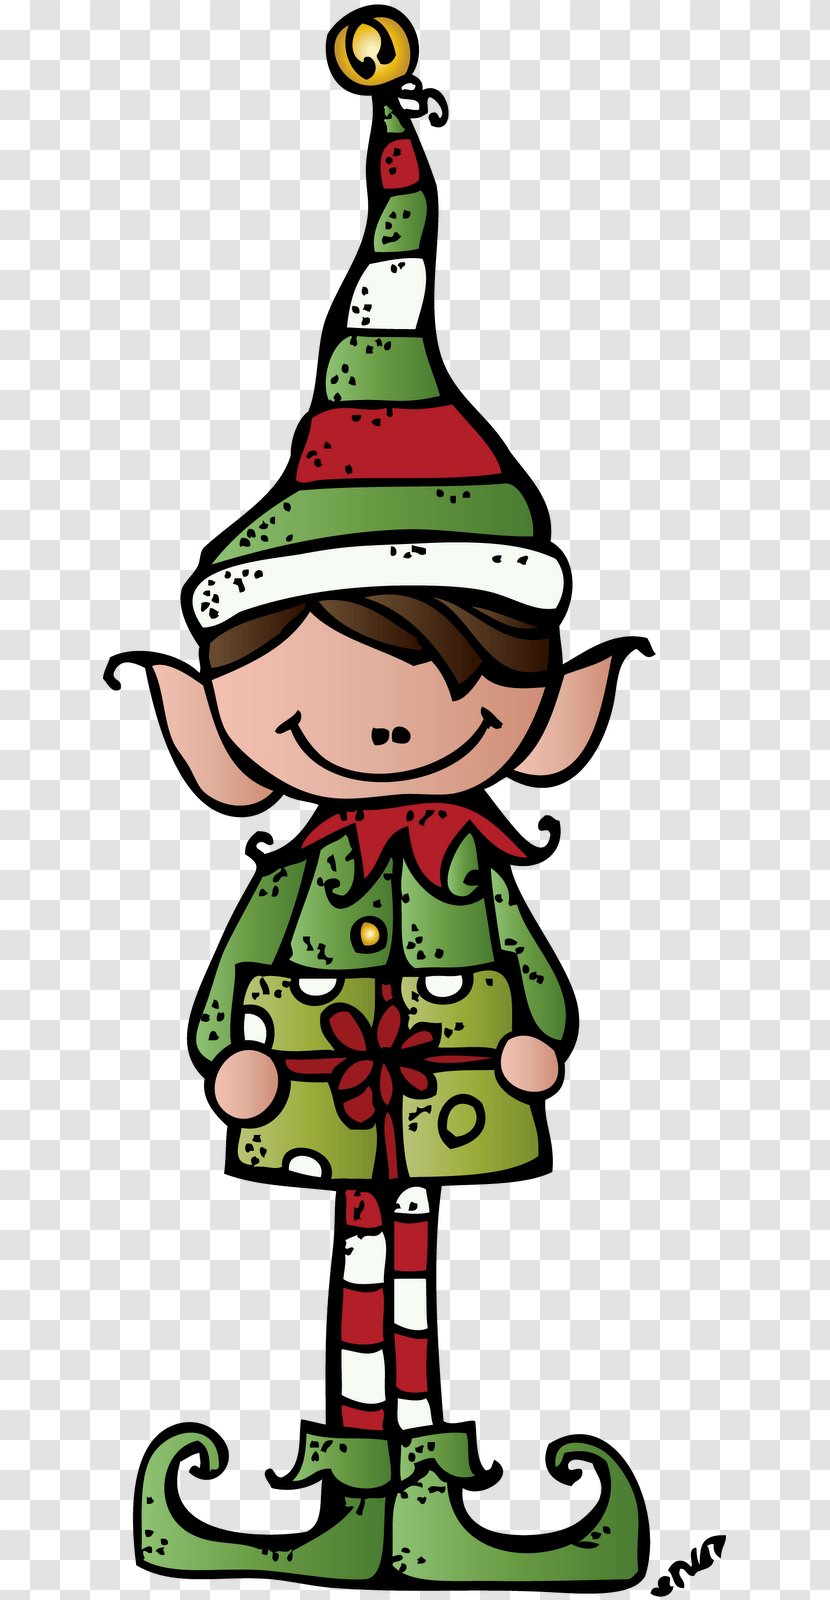 Christmas Graphics Clip Art The Elf On Shelf Day - Ornament - Santa Claus Transparent PNG